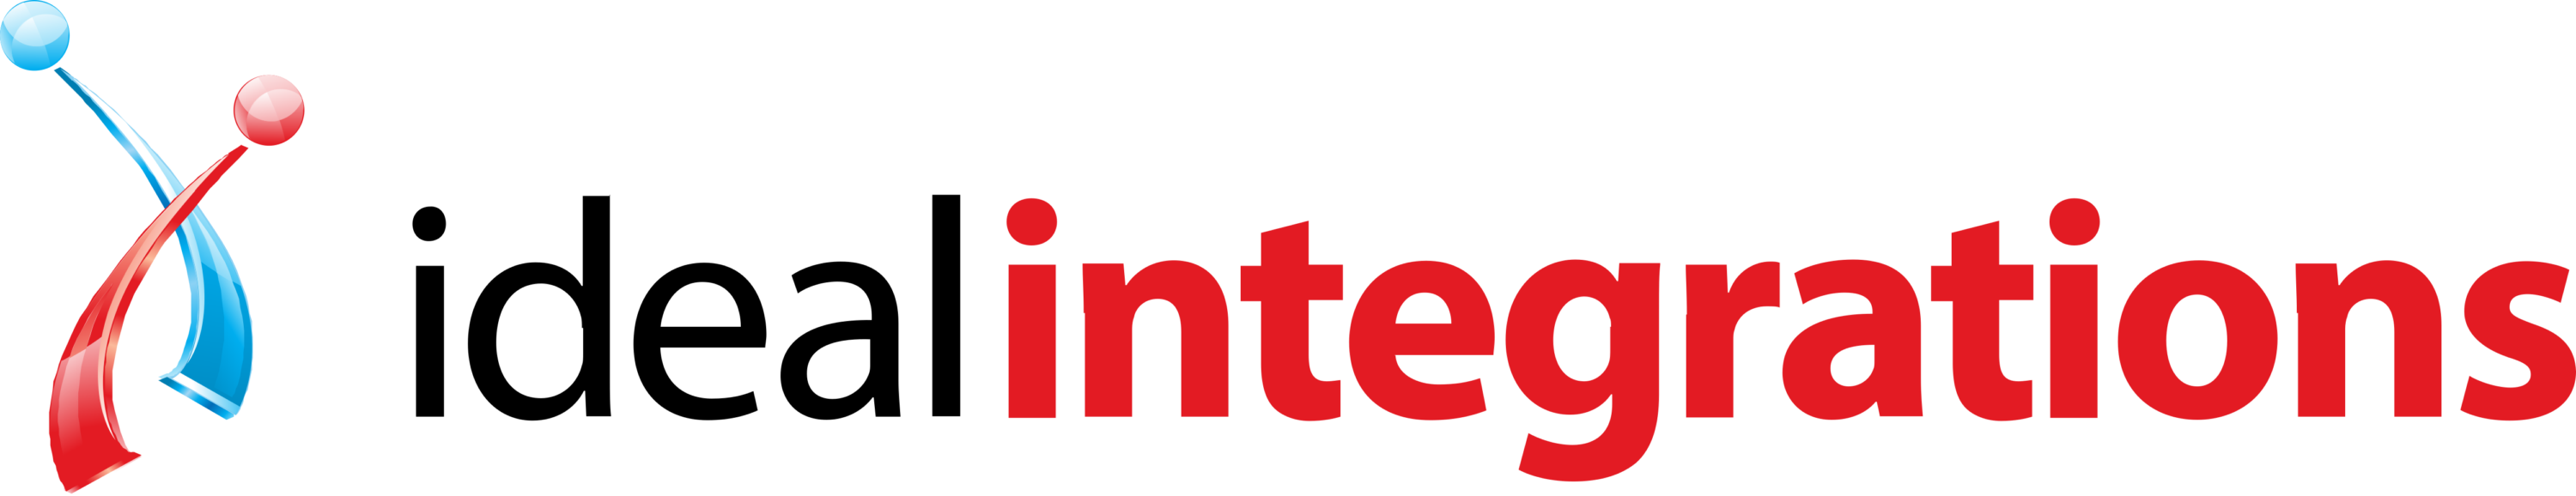 Ideal Integrations Logo